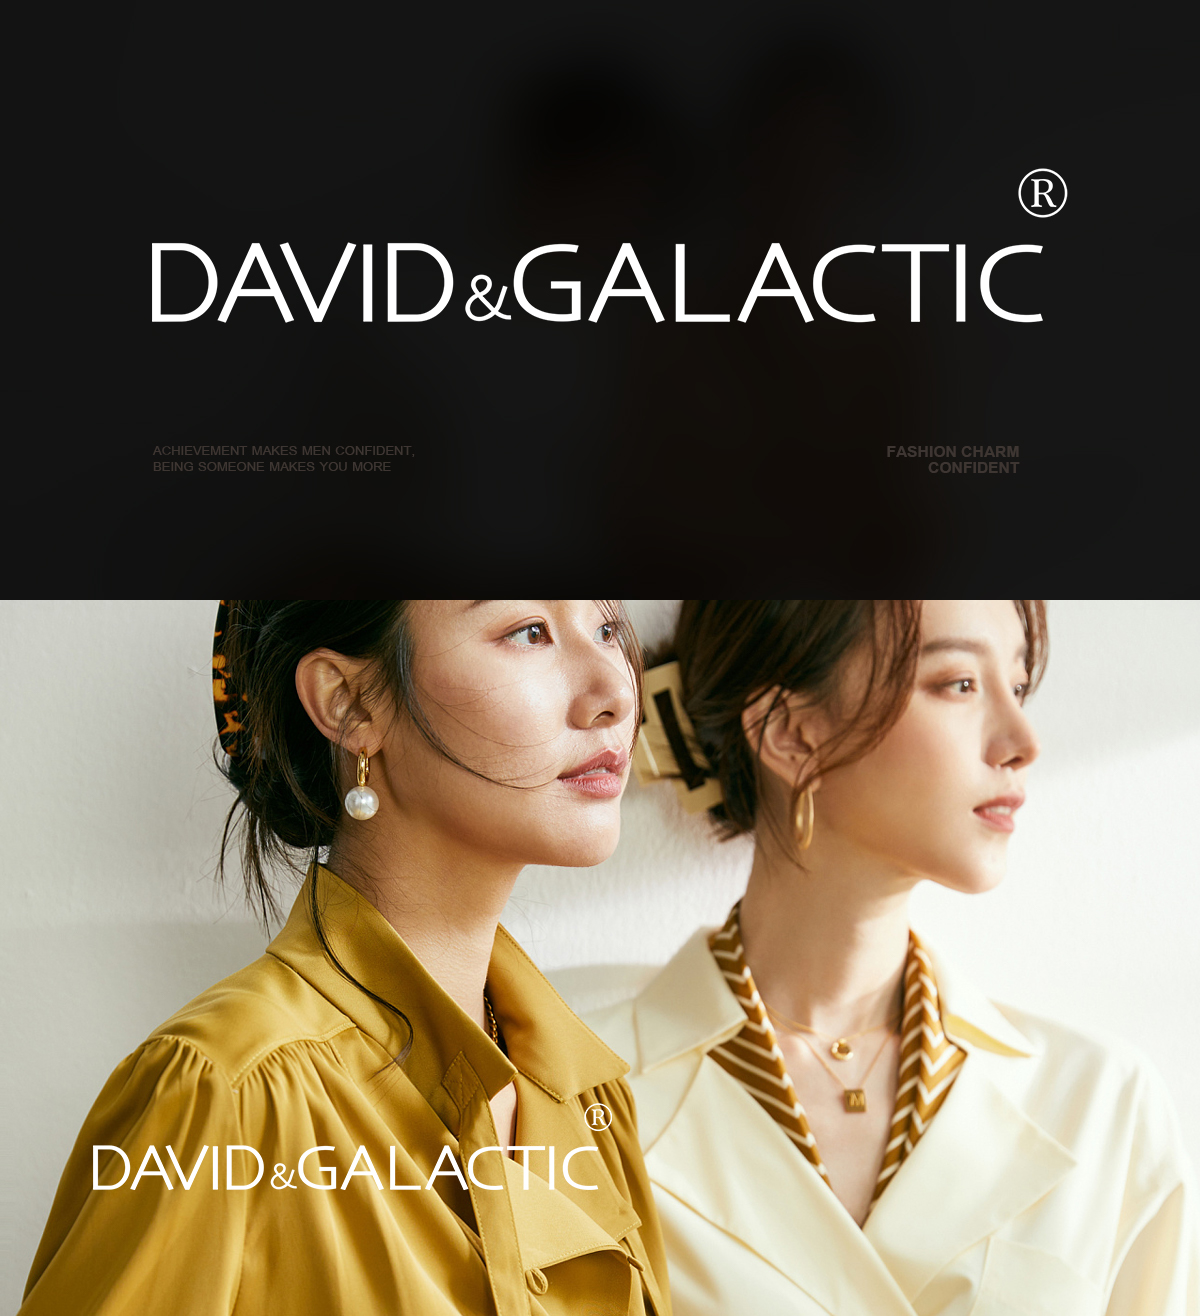 DAVID&GALACTIC